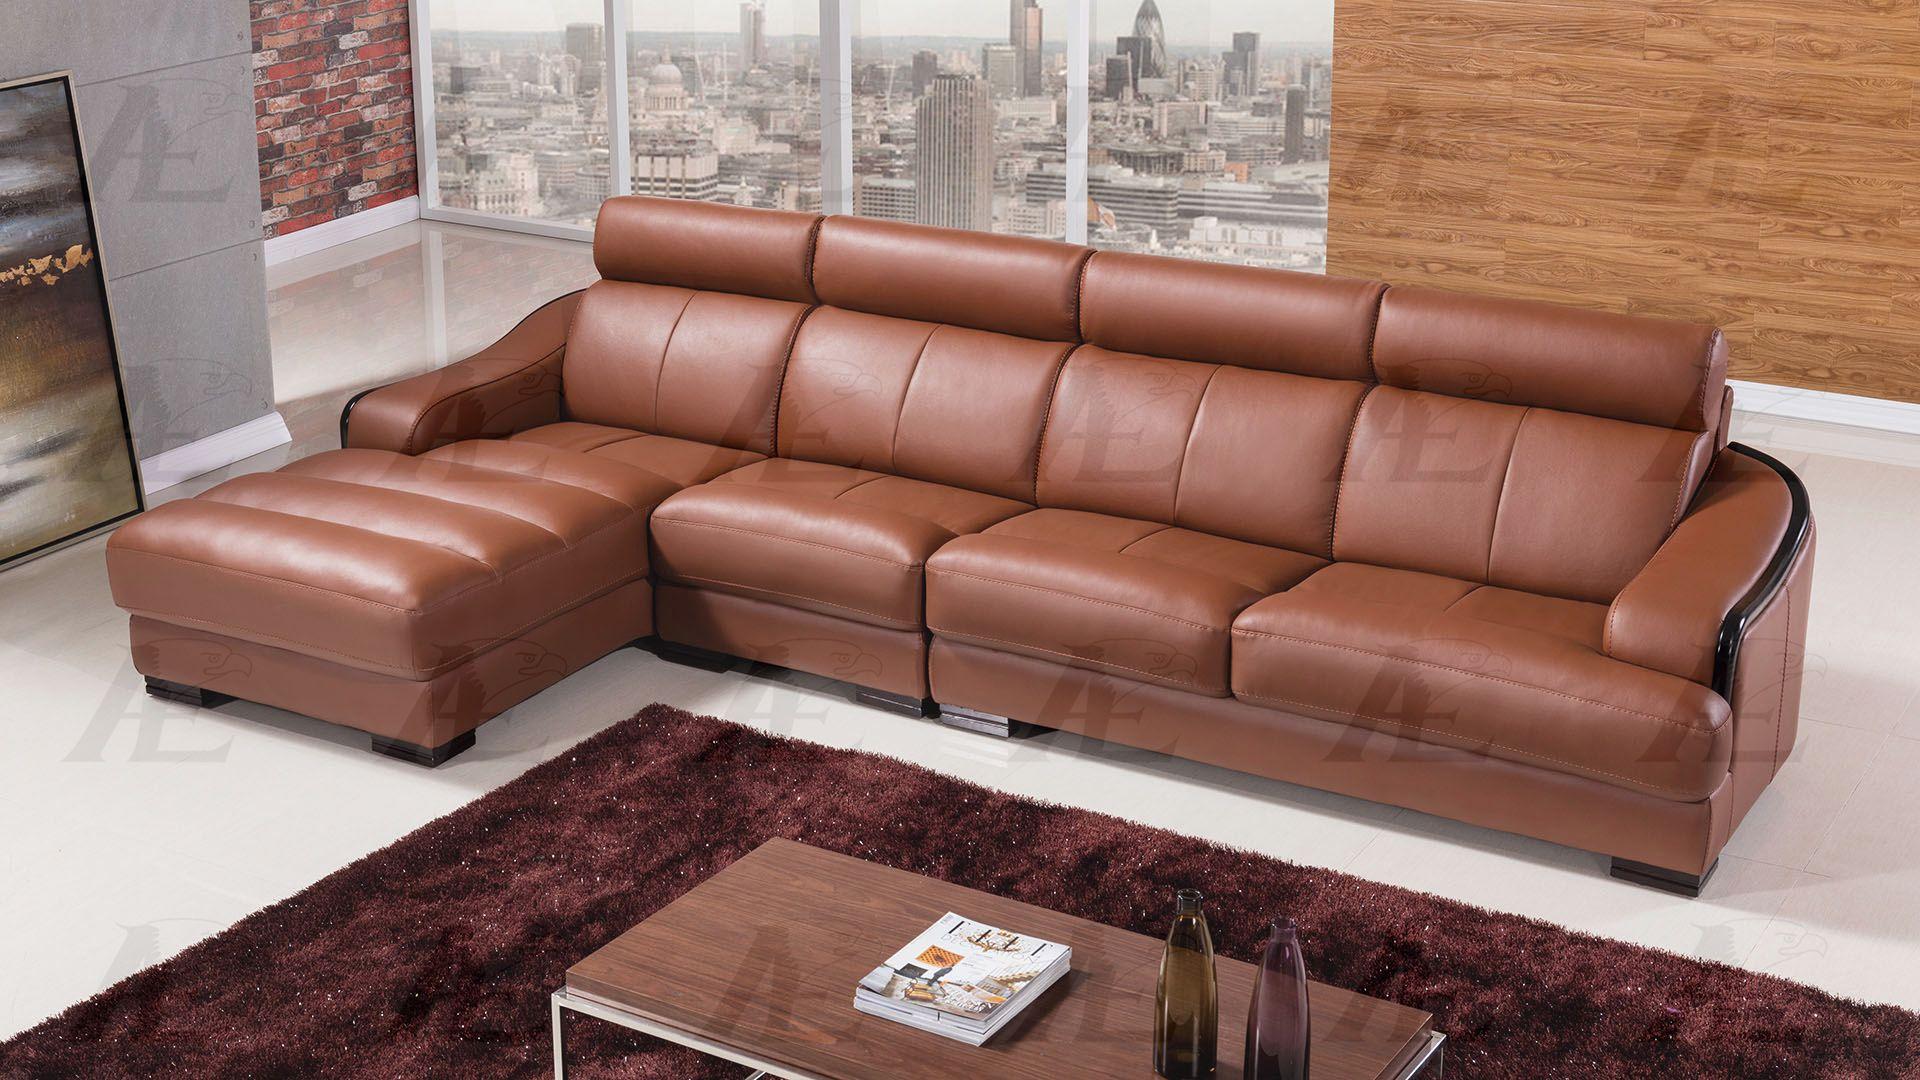 

    
American Eagle Furniture EK-LB310-DT Modern Dark Tan Genuine Leather Sectional LHC 3 Pcs
